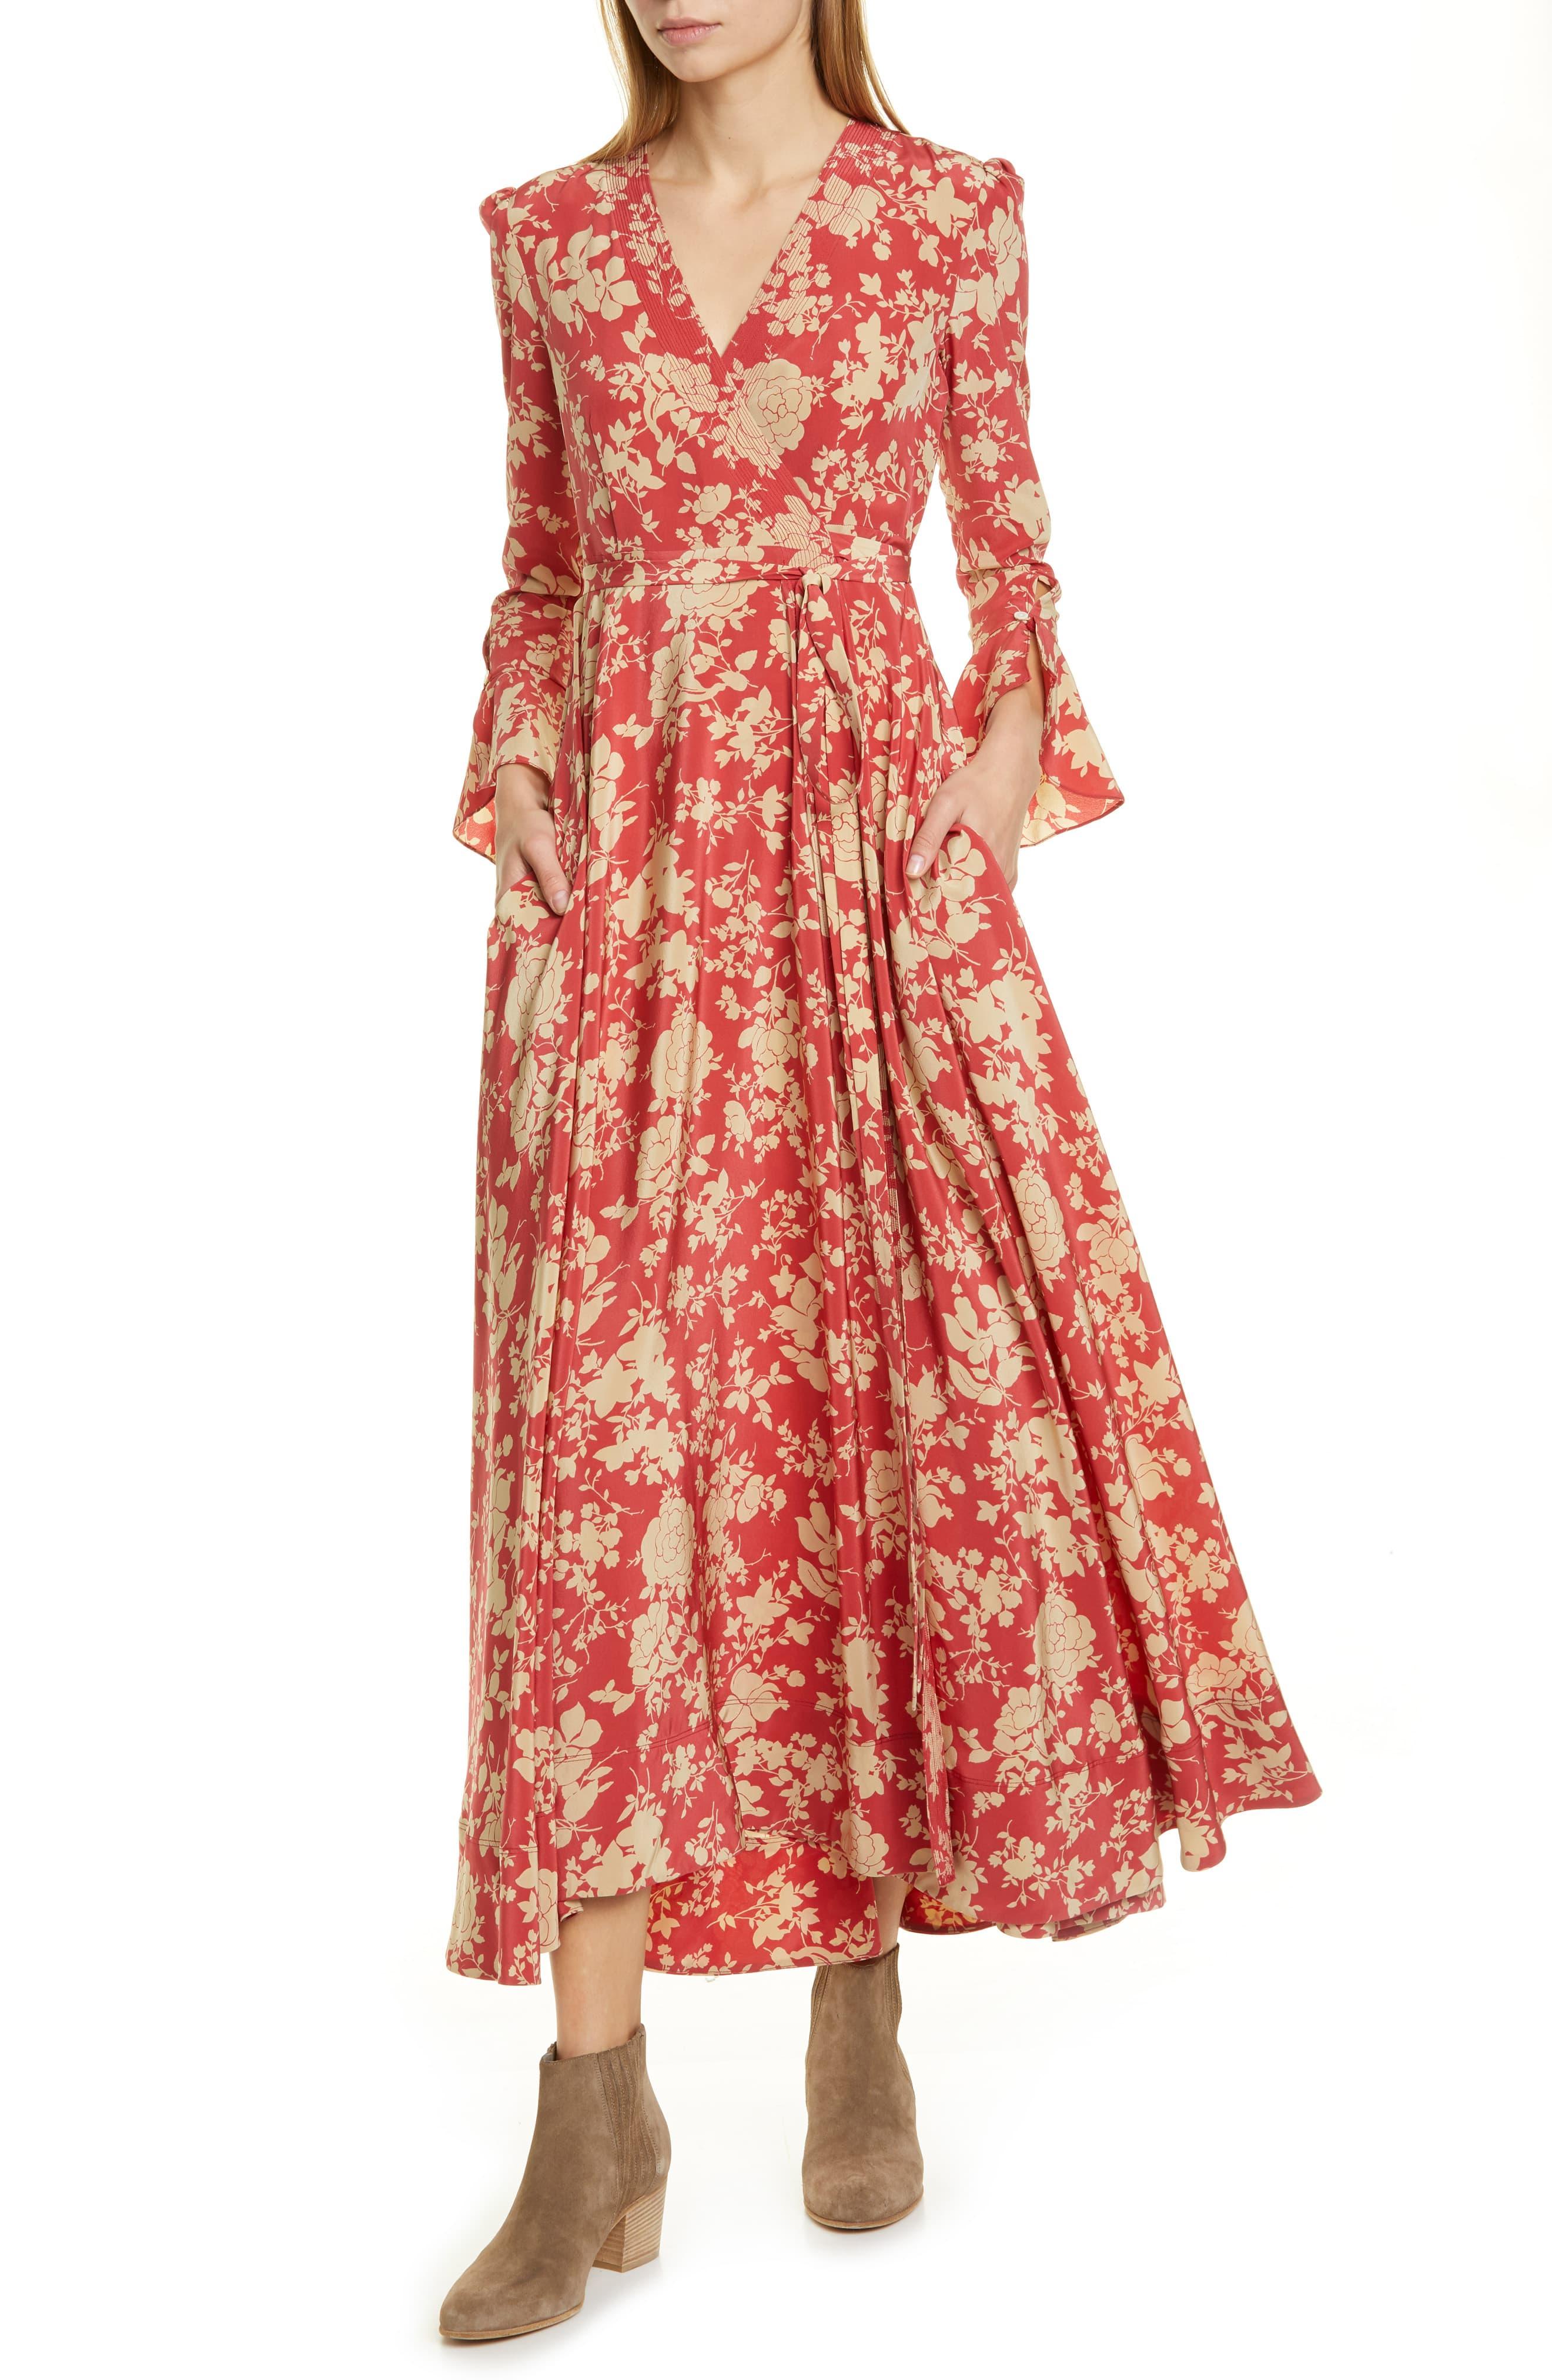 Polo Ralph Lauren Harlow Floral Wrap Dress - Lyst